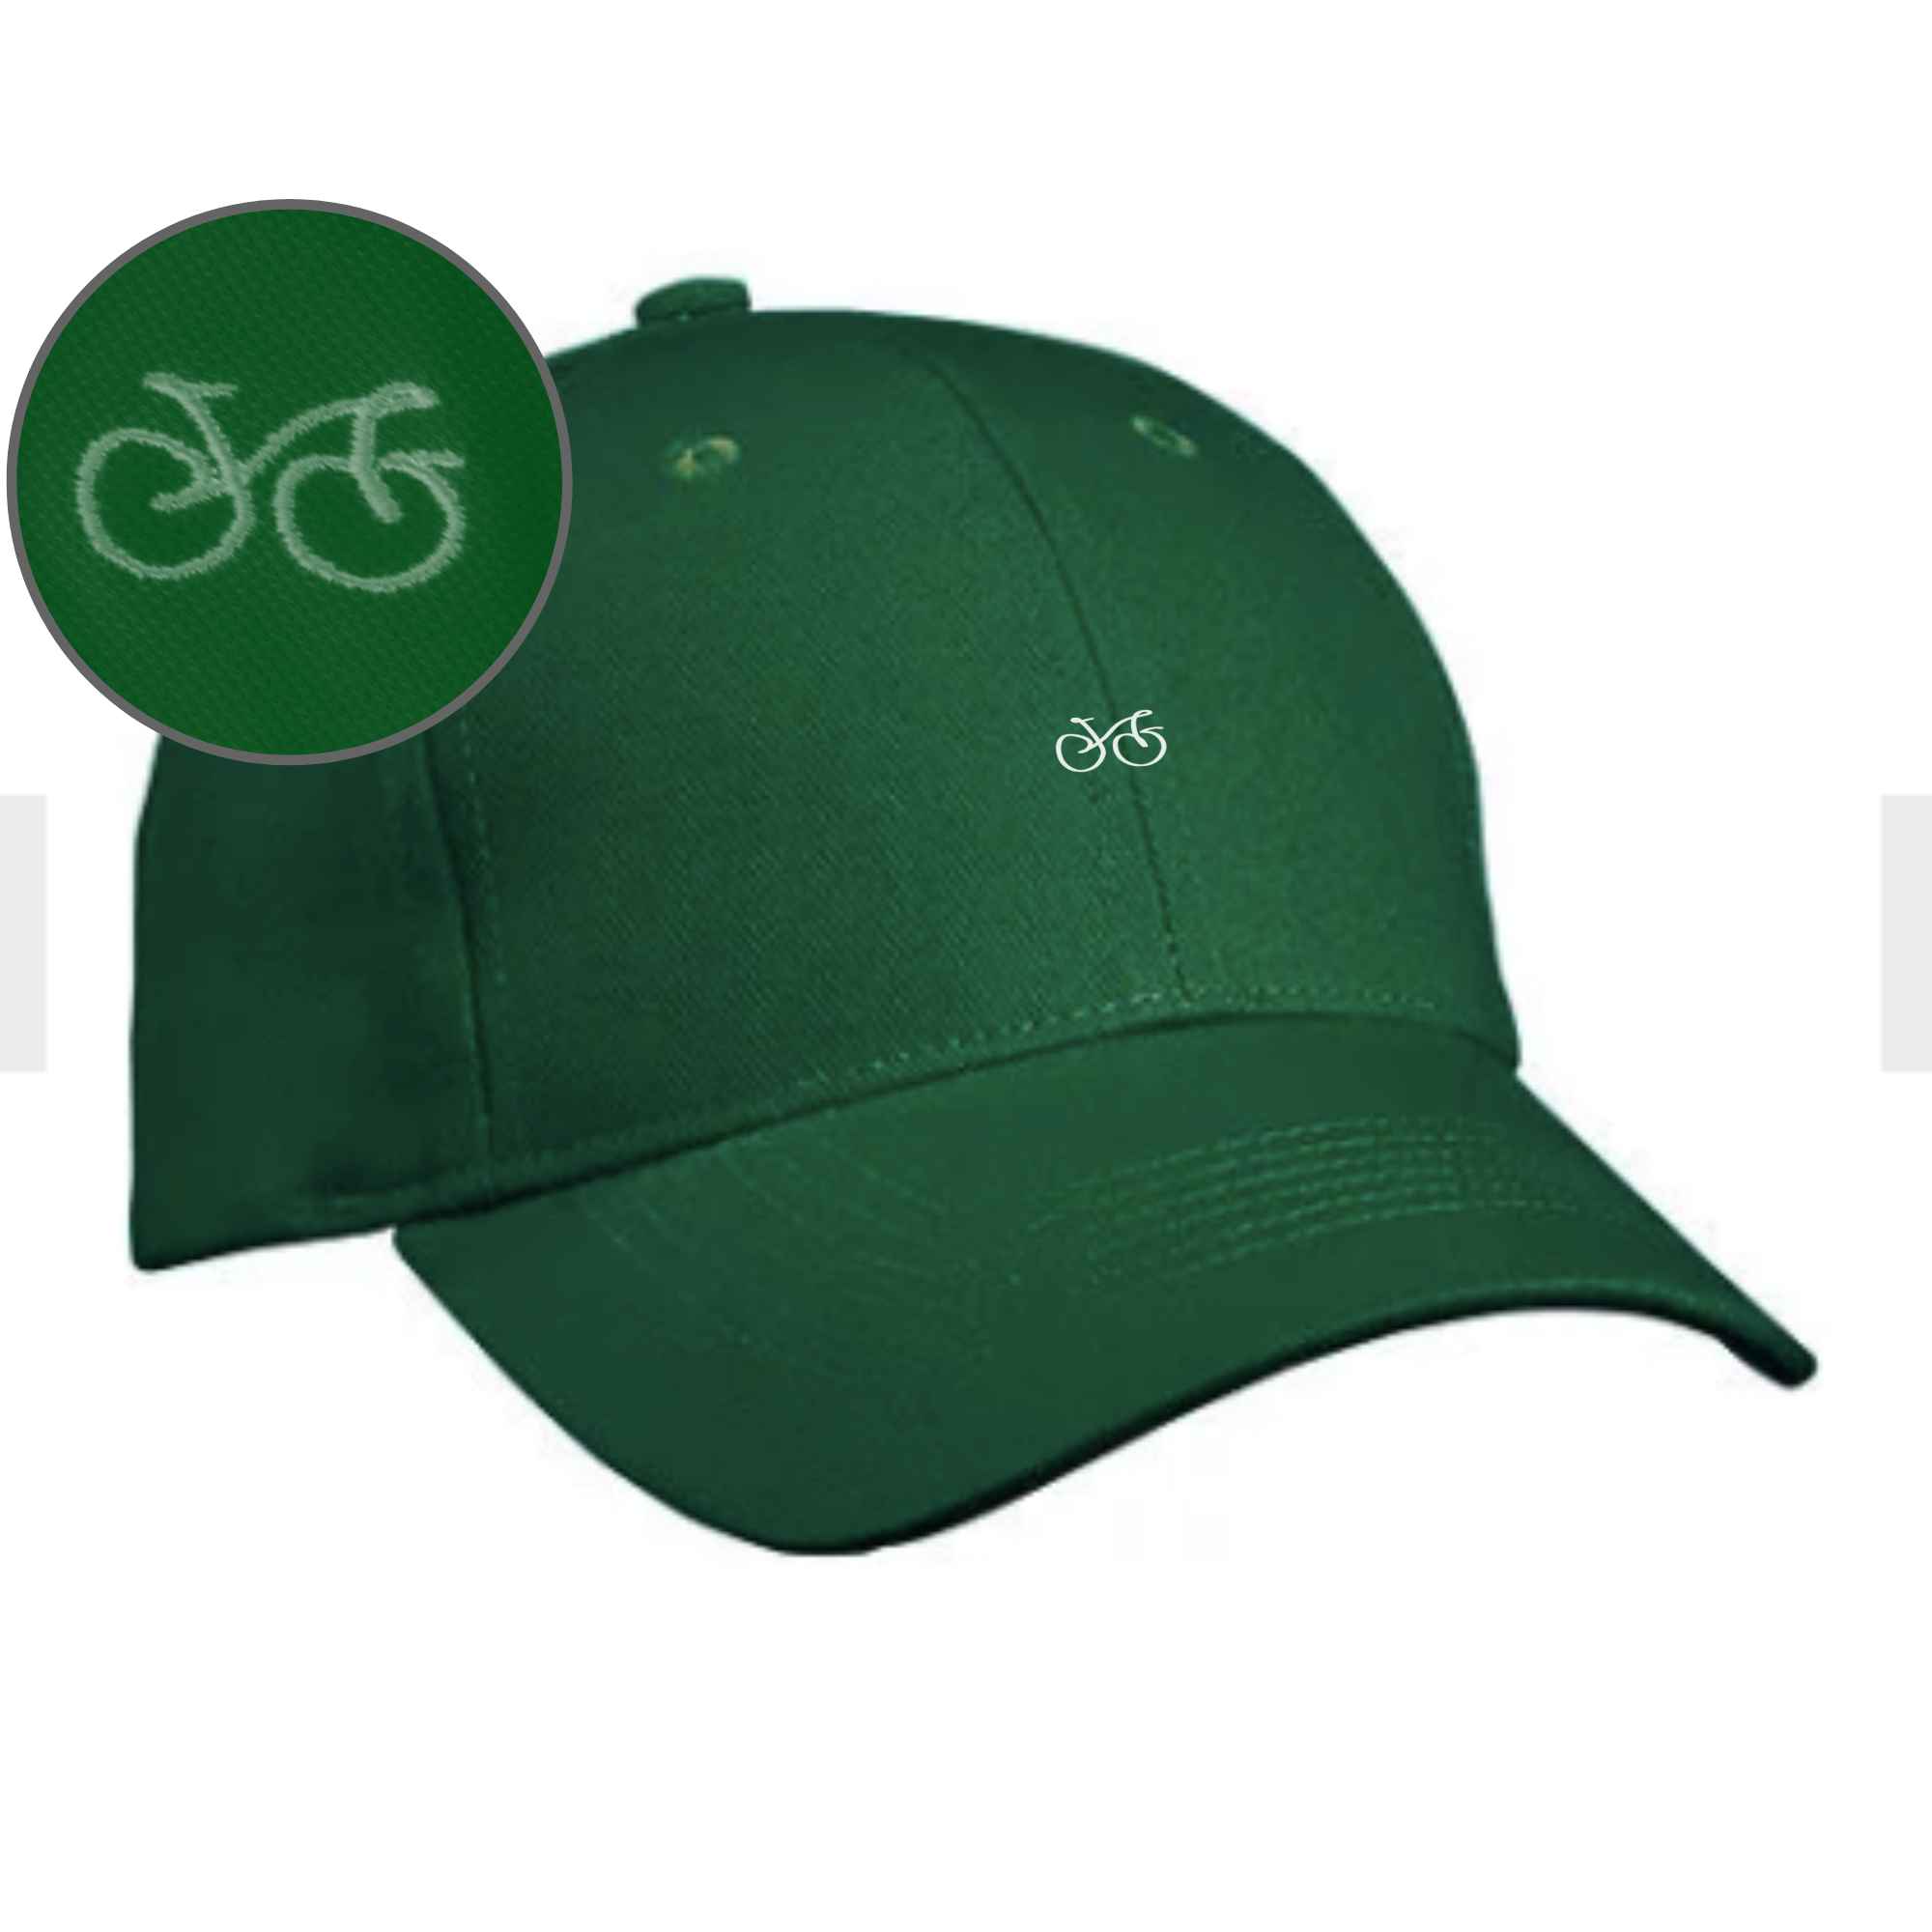 Cap mit Fahrrad-Motiv bestickt in Farbe Grün